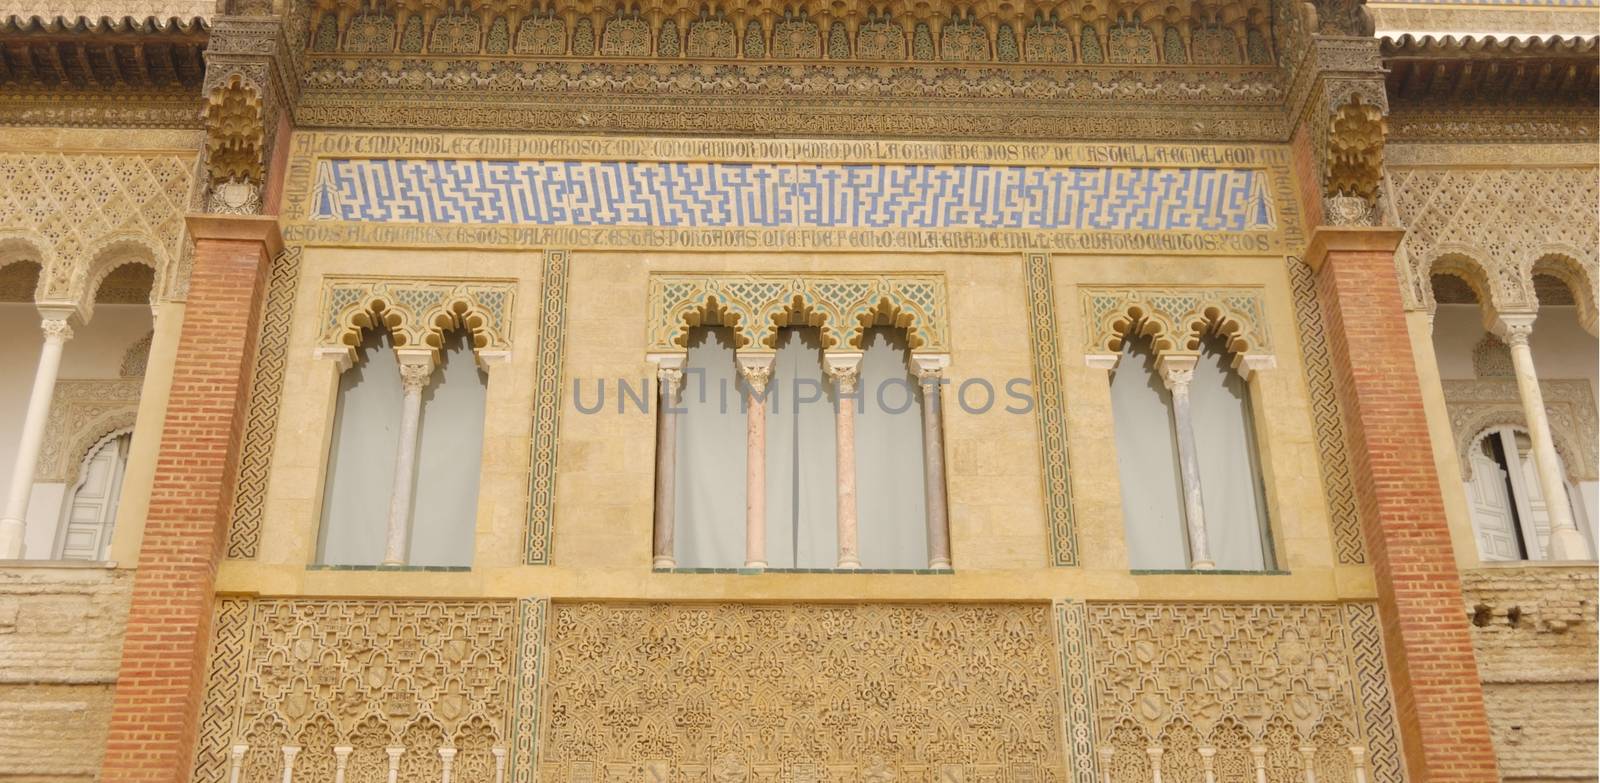 Detail in Alzazar, a mudejar palace located in Seville, Spain